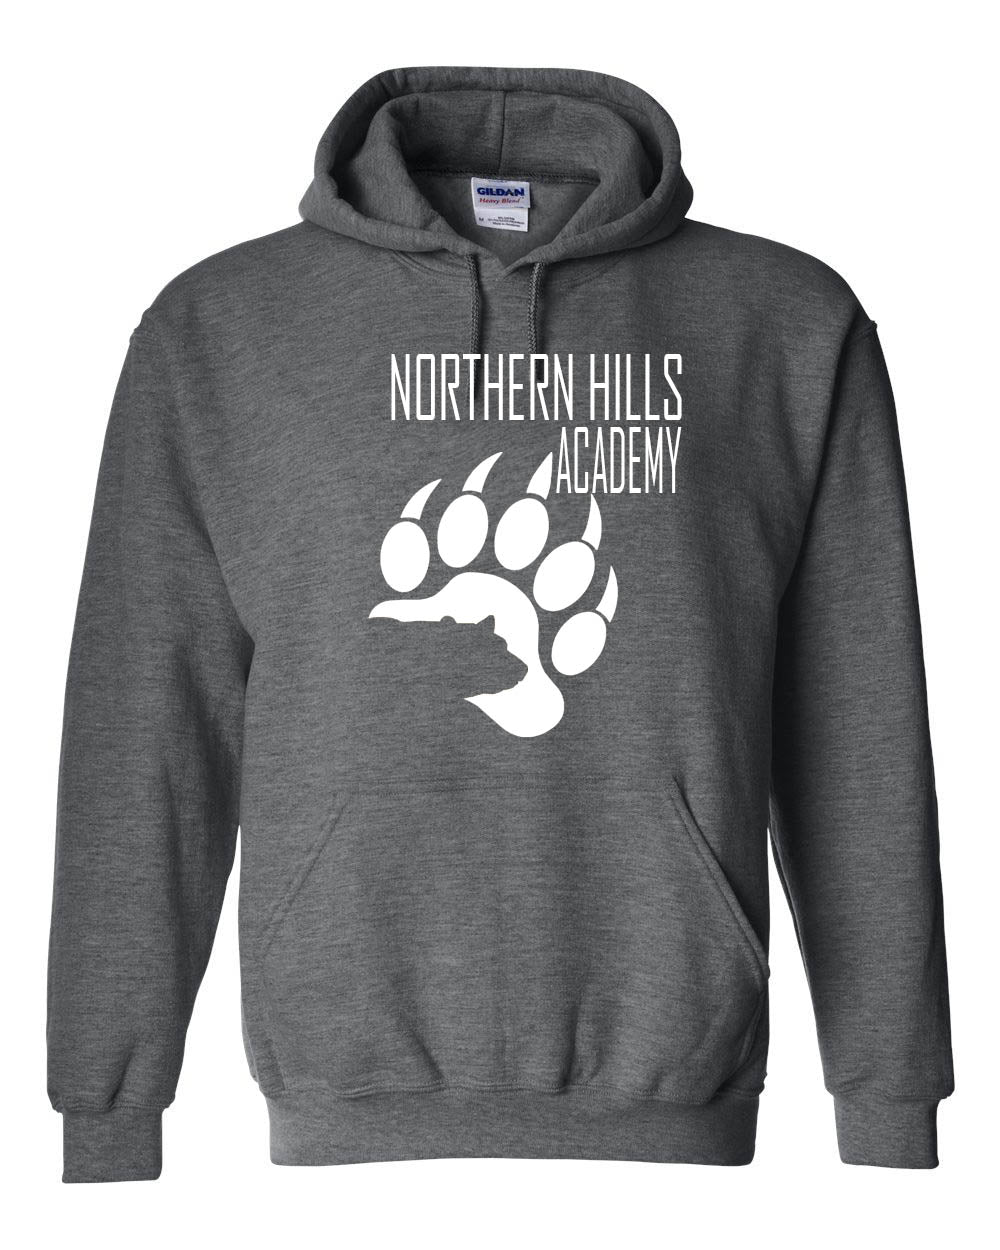 Northern Hills design 3 Hooded Sweatshirt